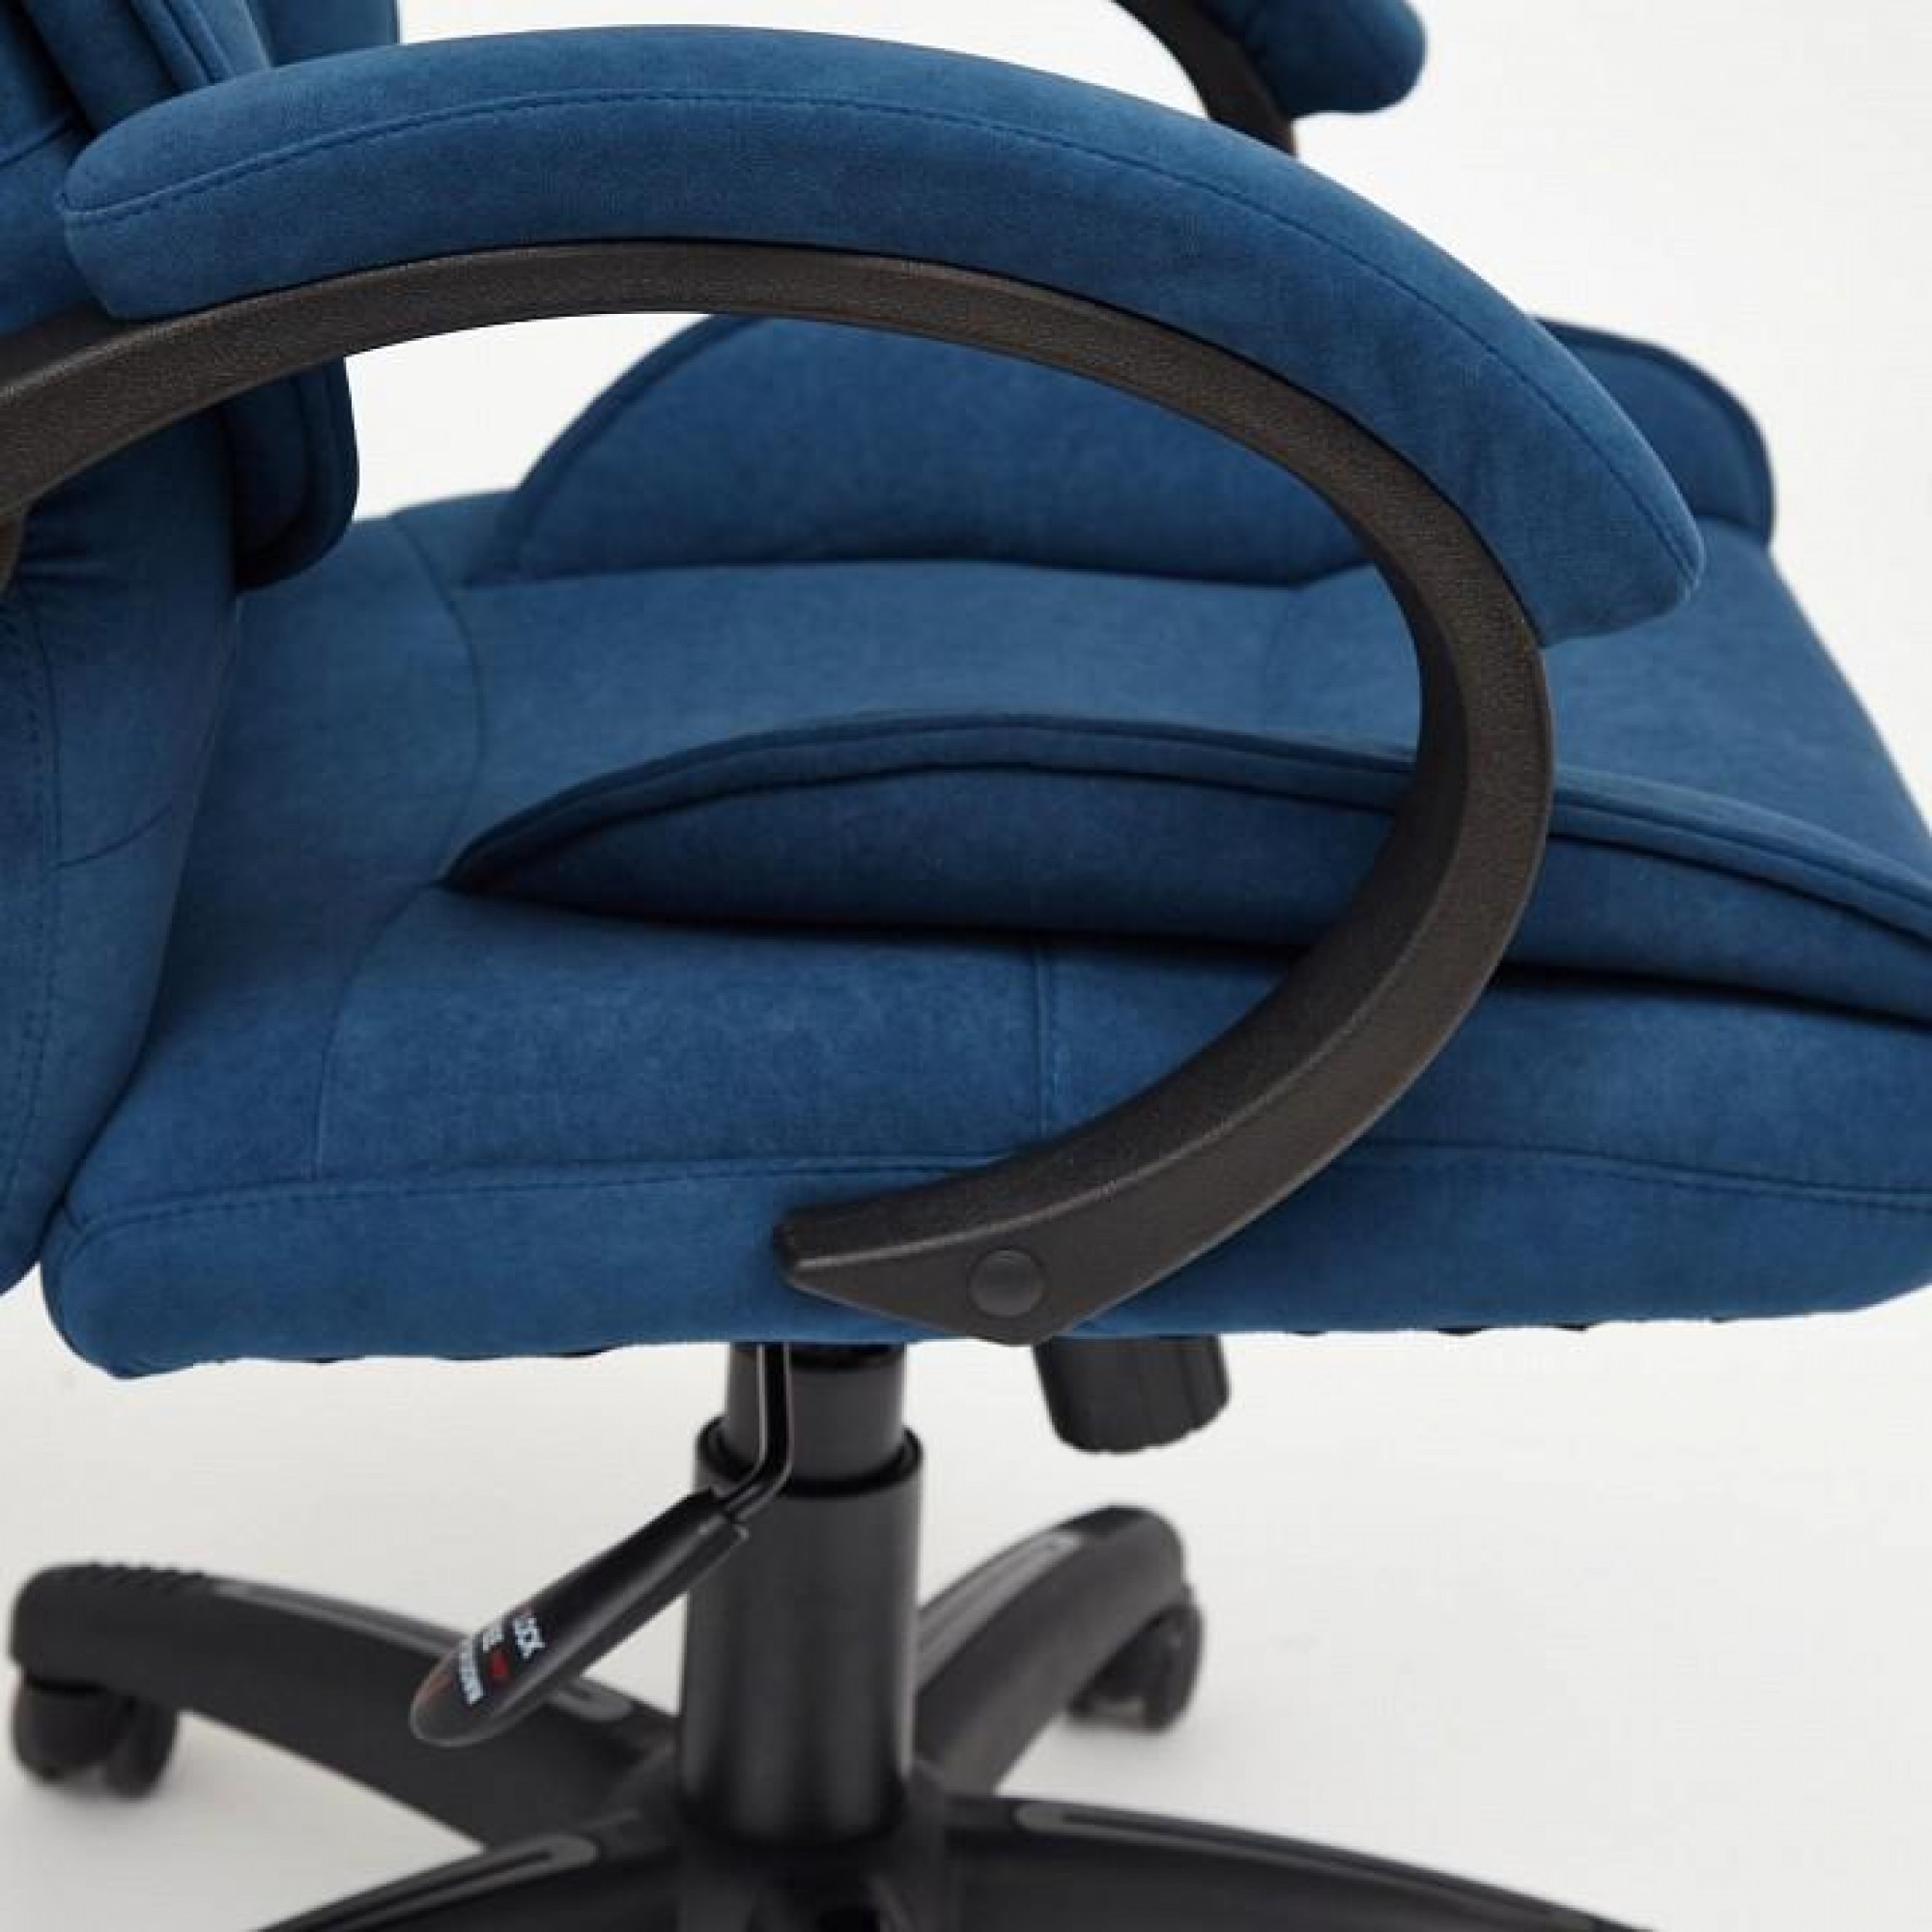 Кресло компьютерное Oreon синий TET_13780